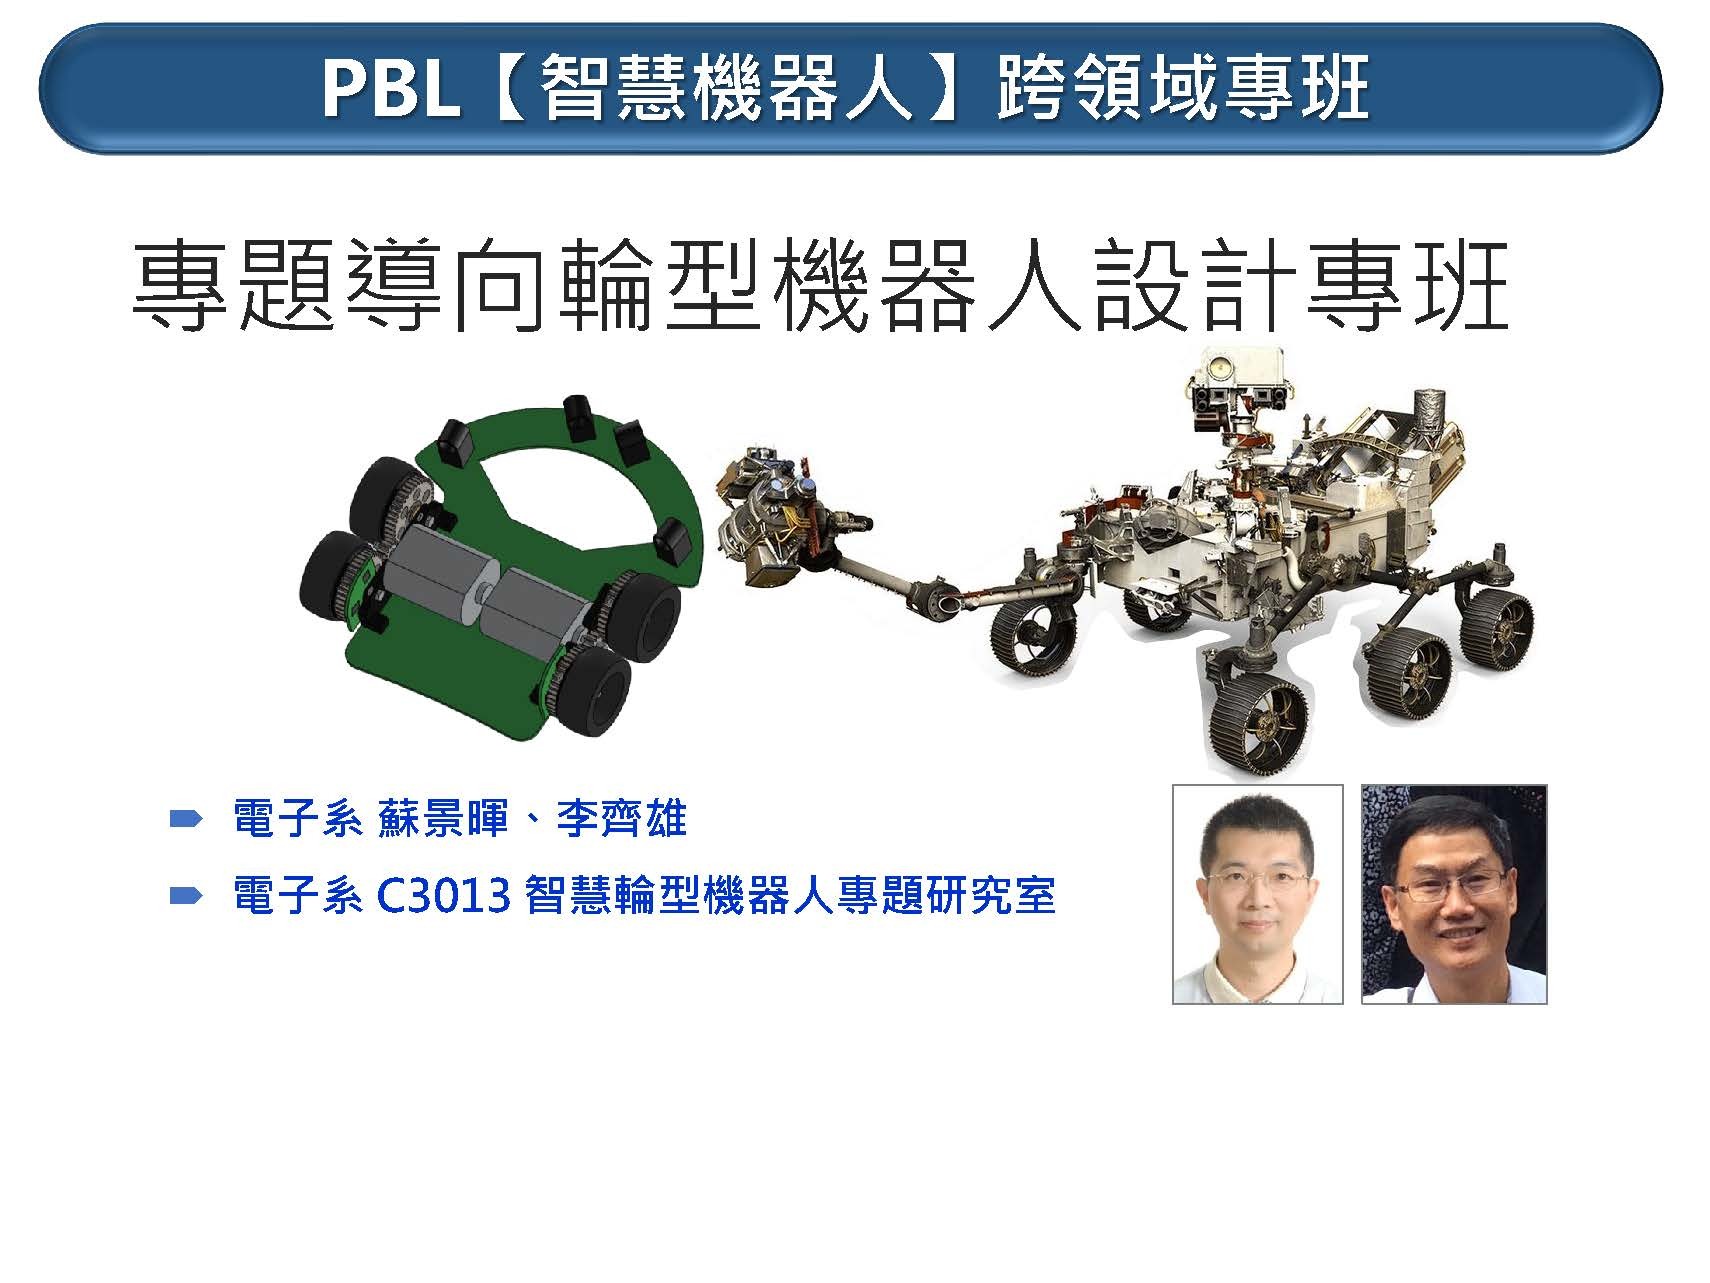 PBL(智慧機器人)跨領域專班-輪型機器人設計專班簡介示意圖